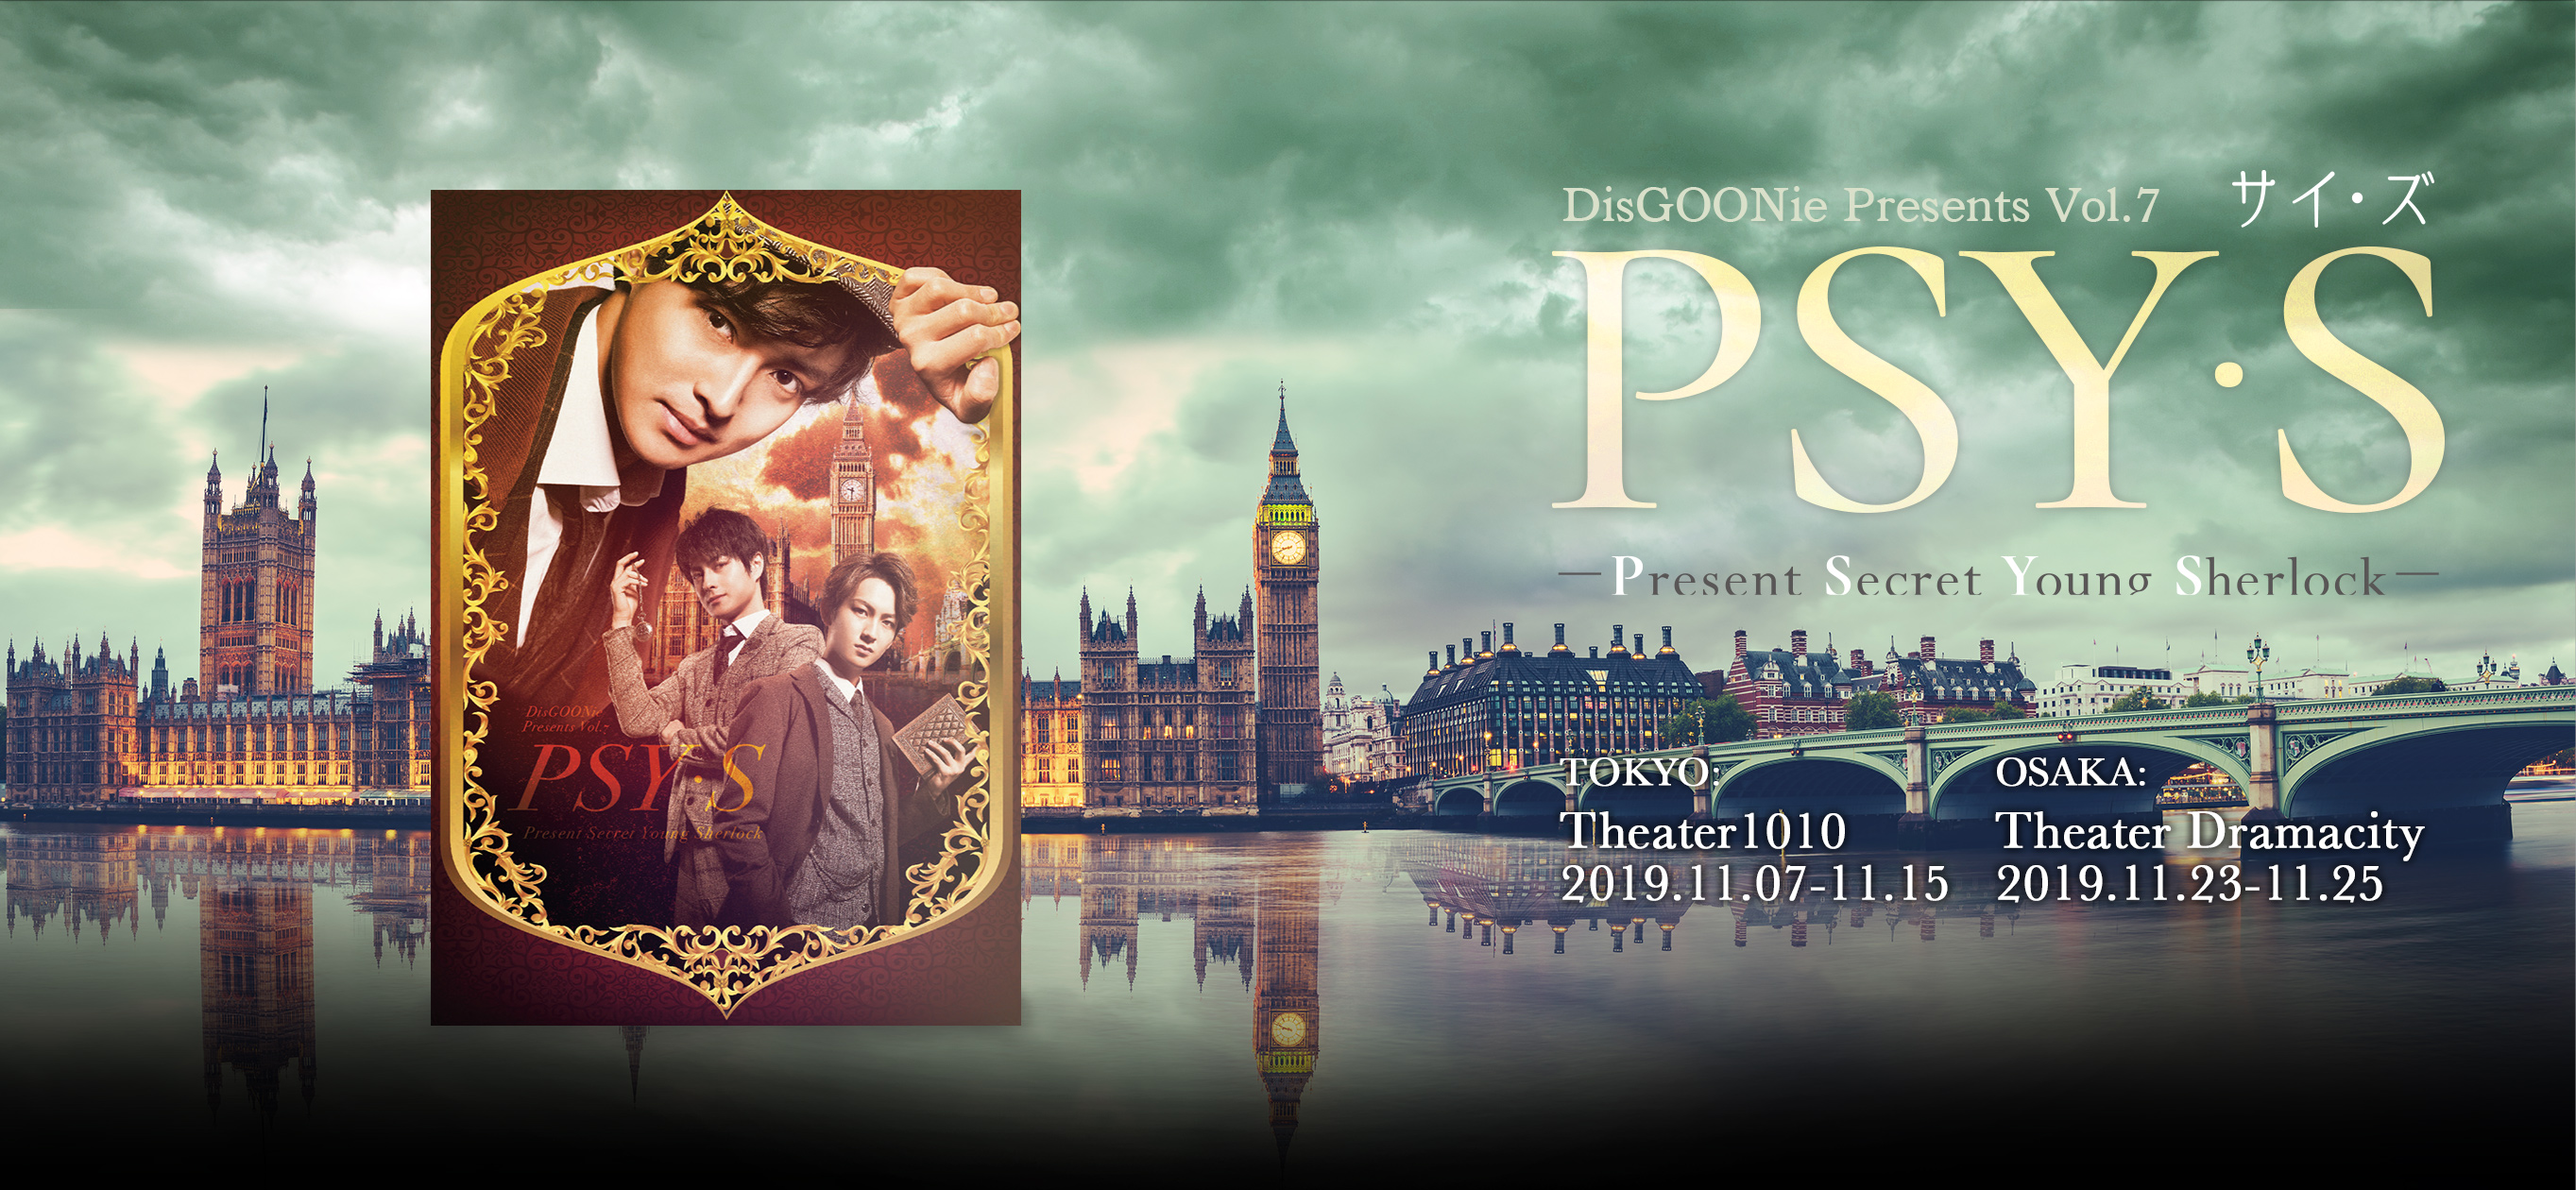 DisGOONie Presents Vol.7 舞台「PSY・S」（サイ・ズ）作・演出・プロデュース：西田大輔